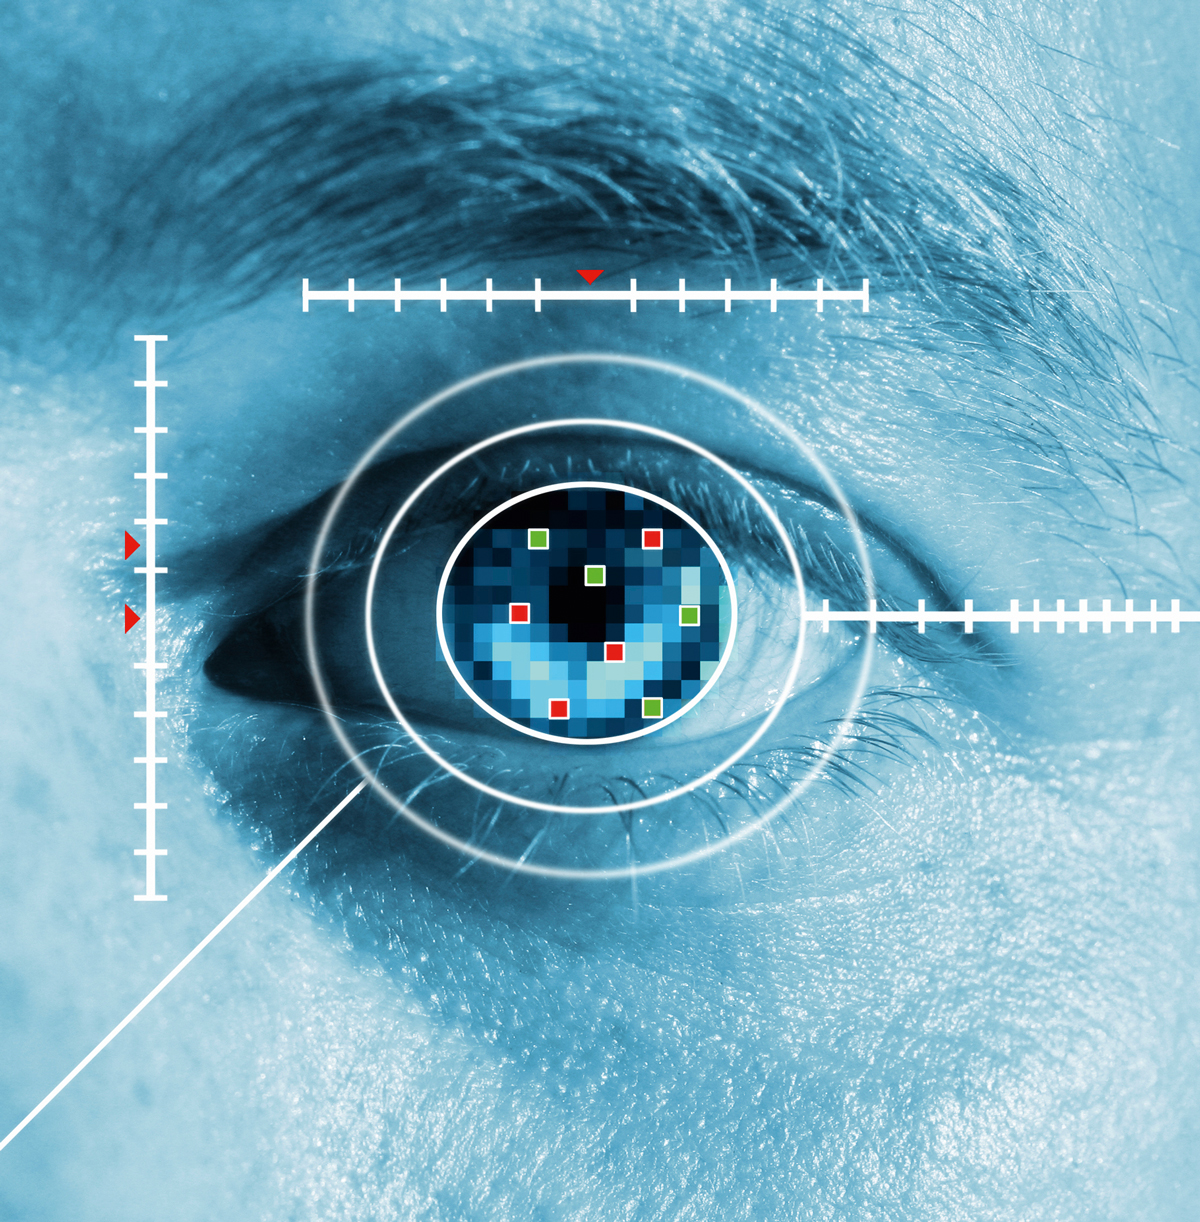 Excelitas provides custom photonic solutions for retinal diagnostics